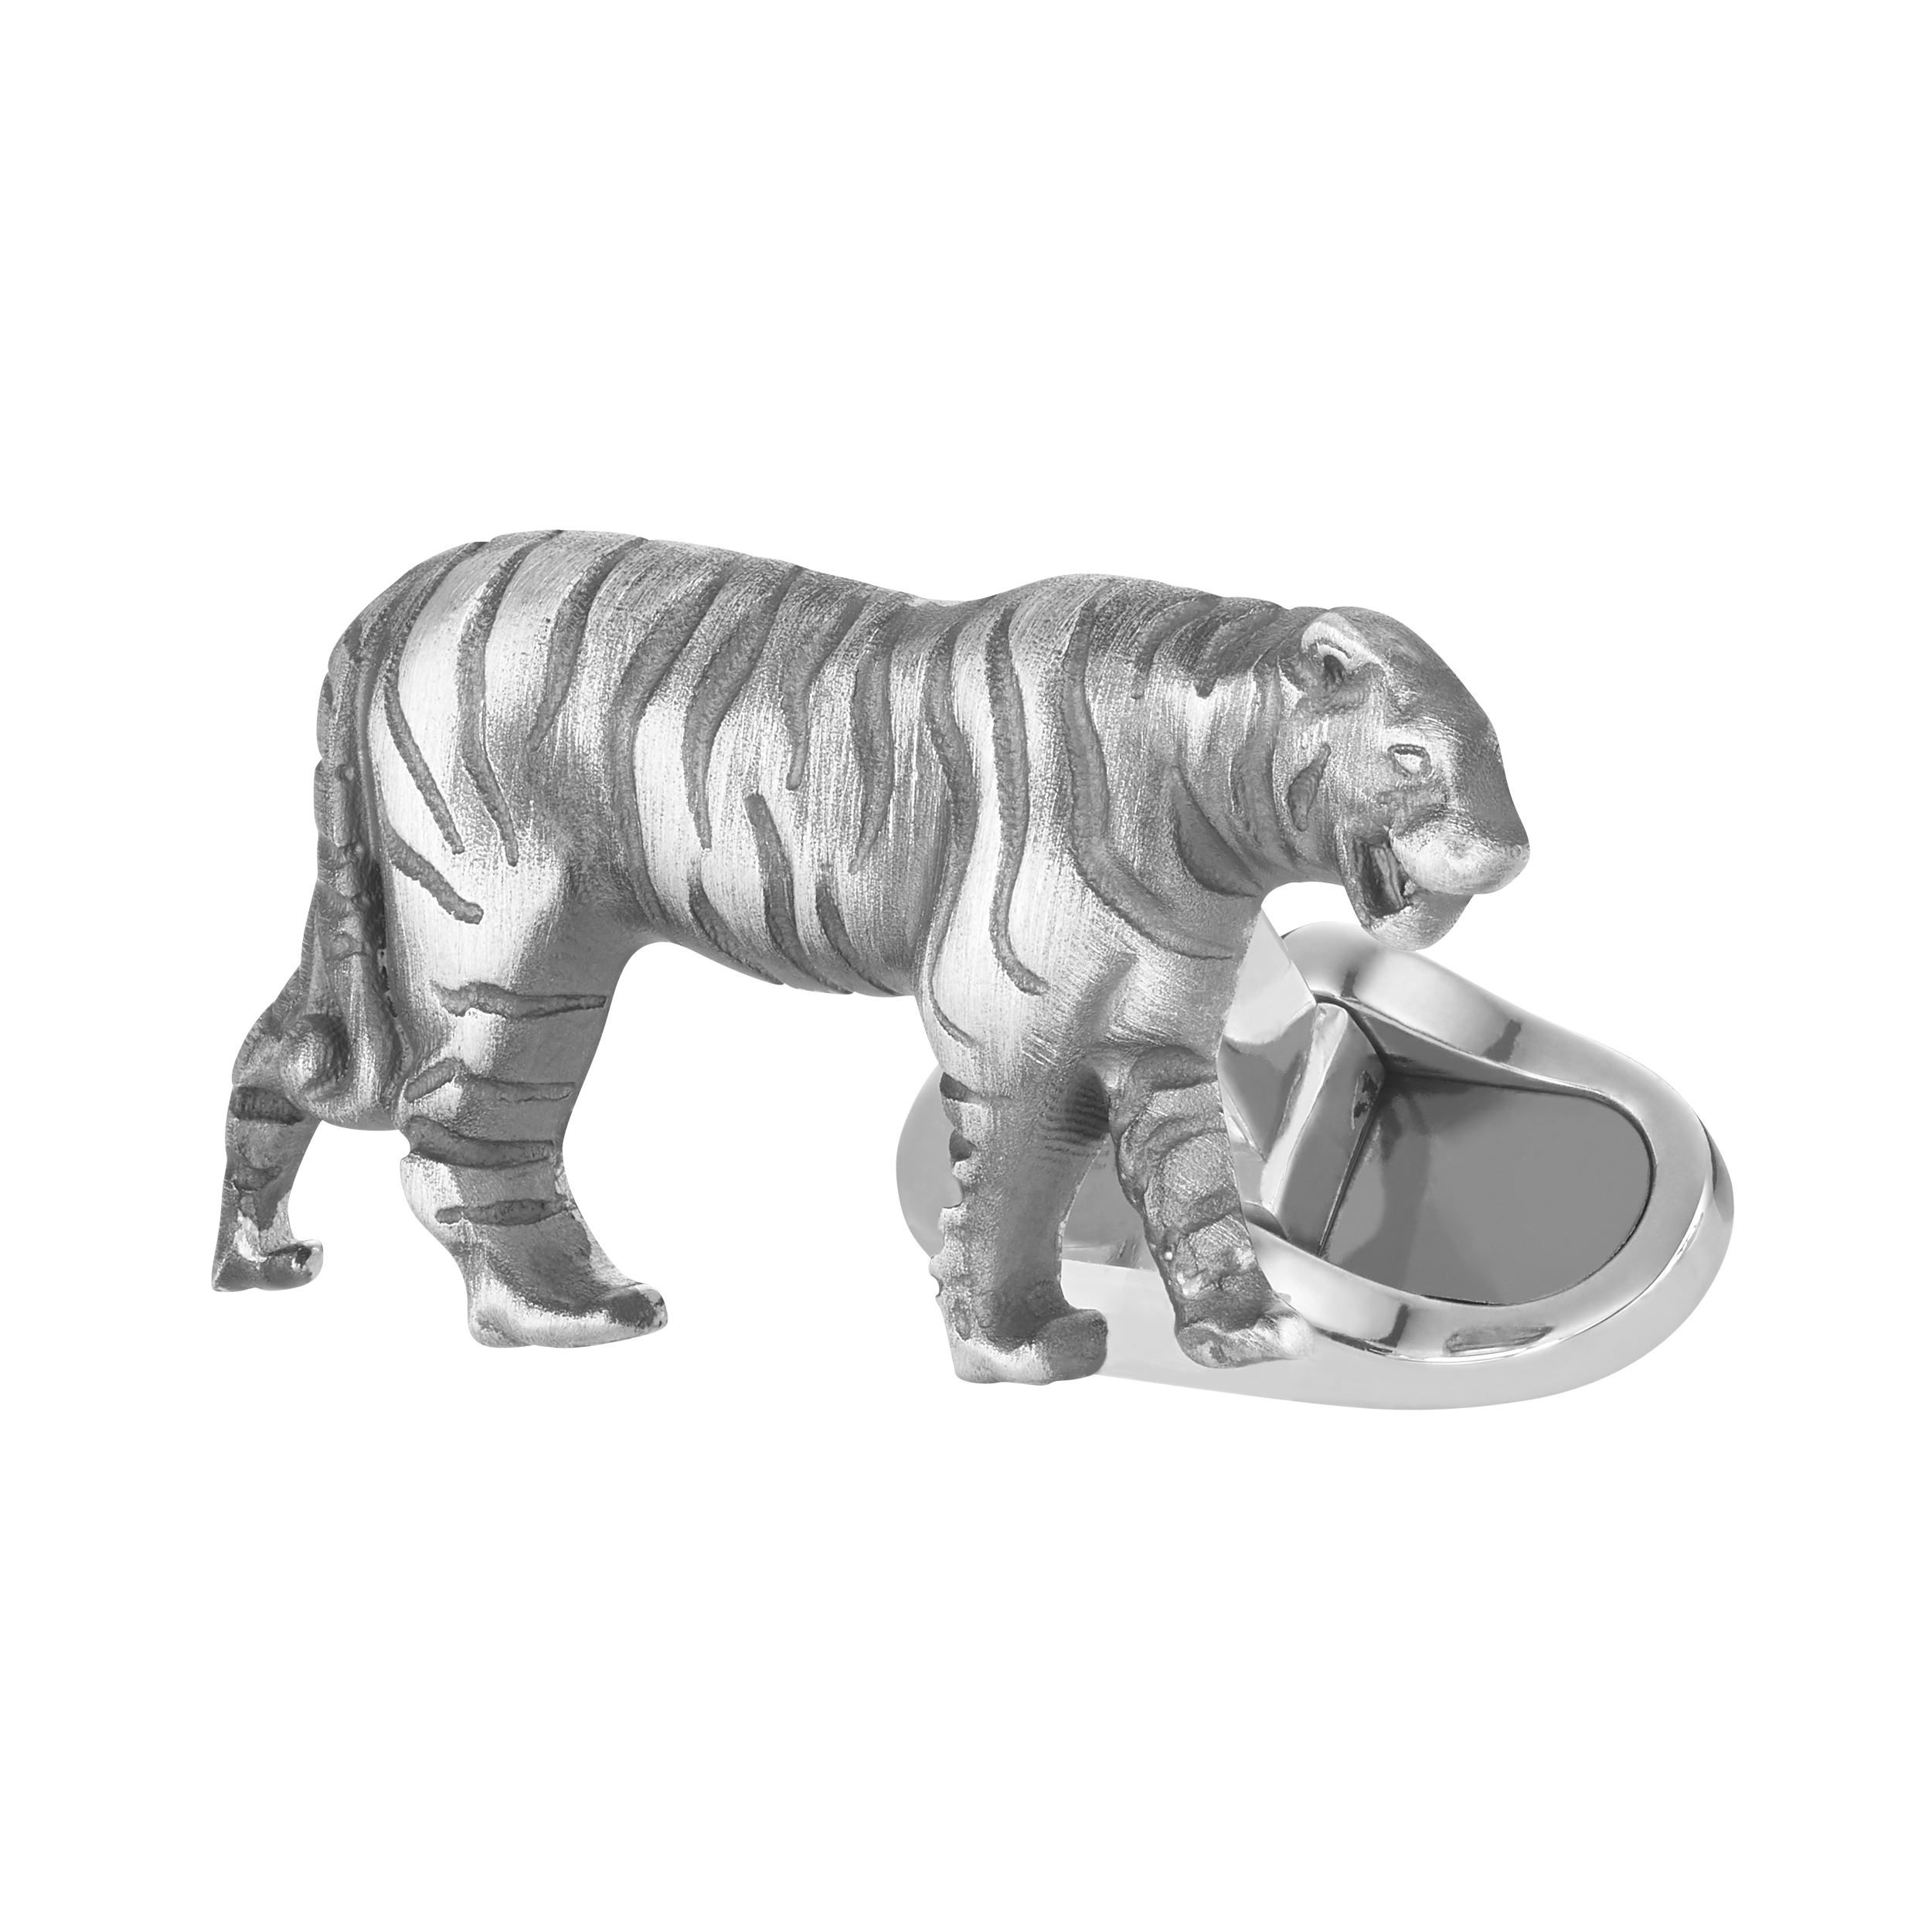 Tiger Zodiac Sign Cufflinks in Silver, image 2